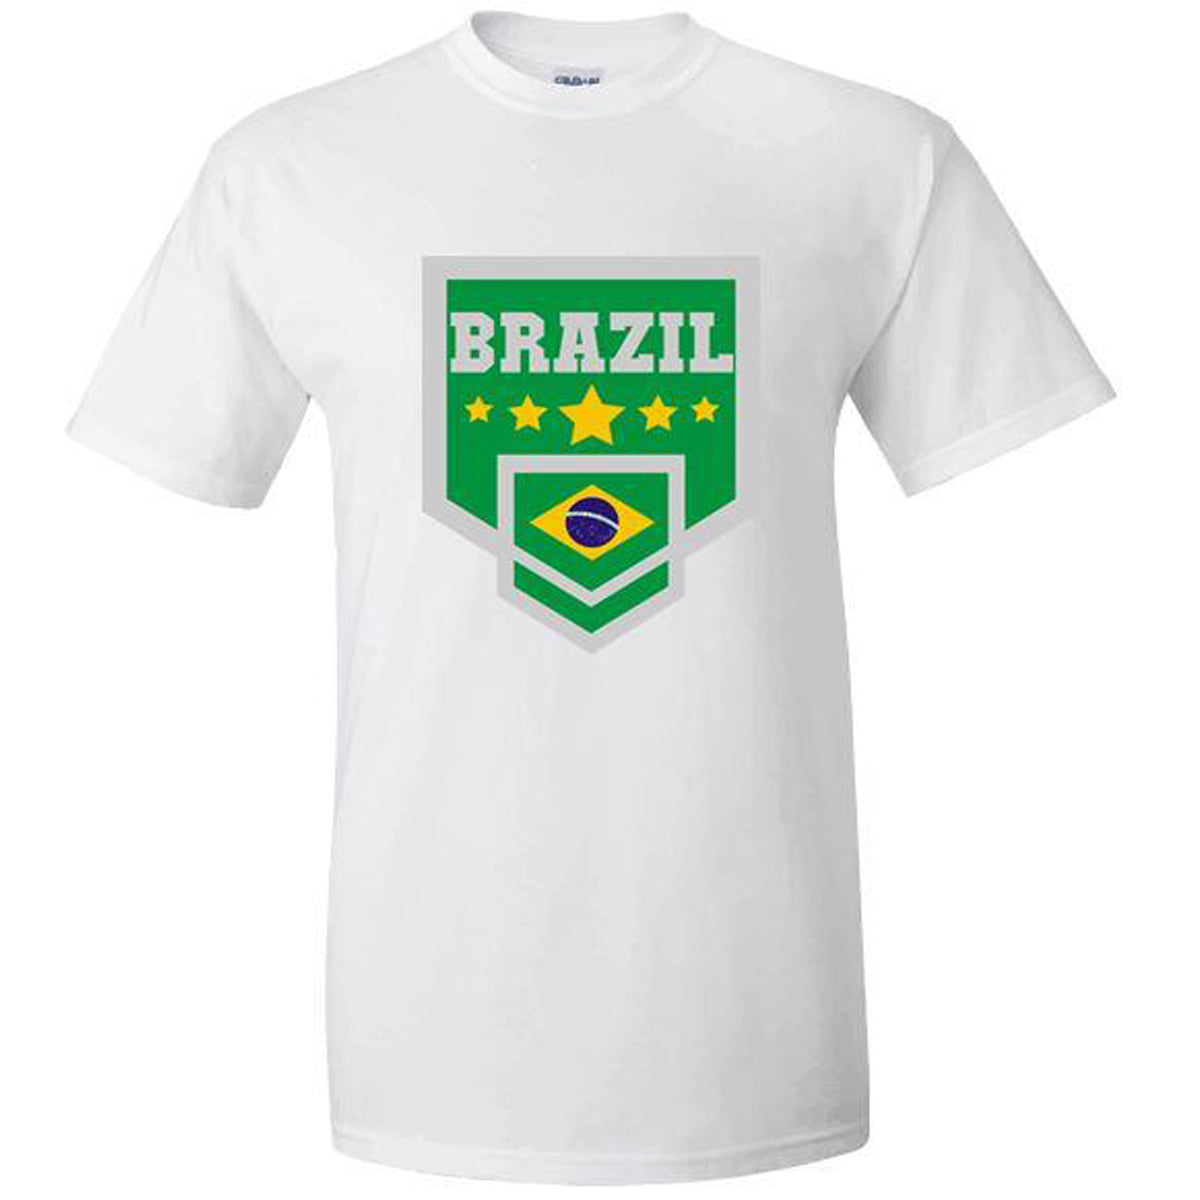 Kids Brazil Soccer Jerseys at best price in Jalandhar by Gag Wears